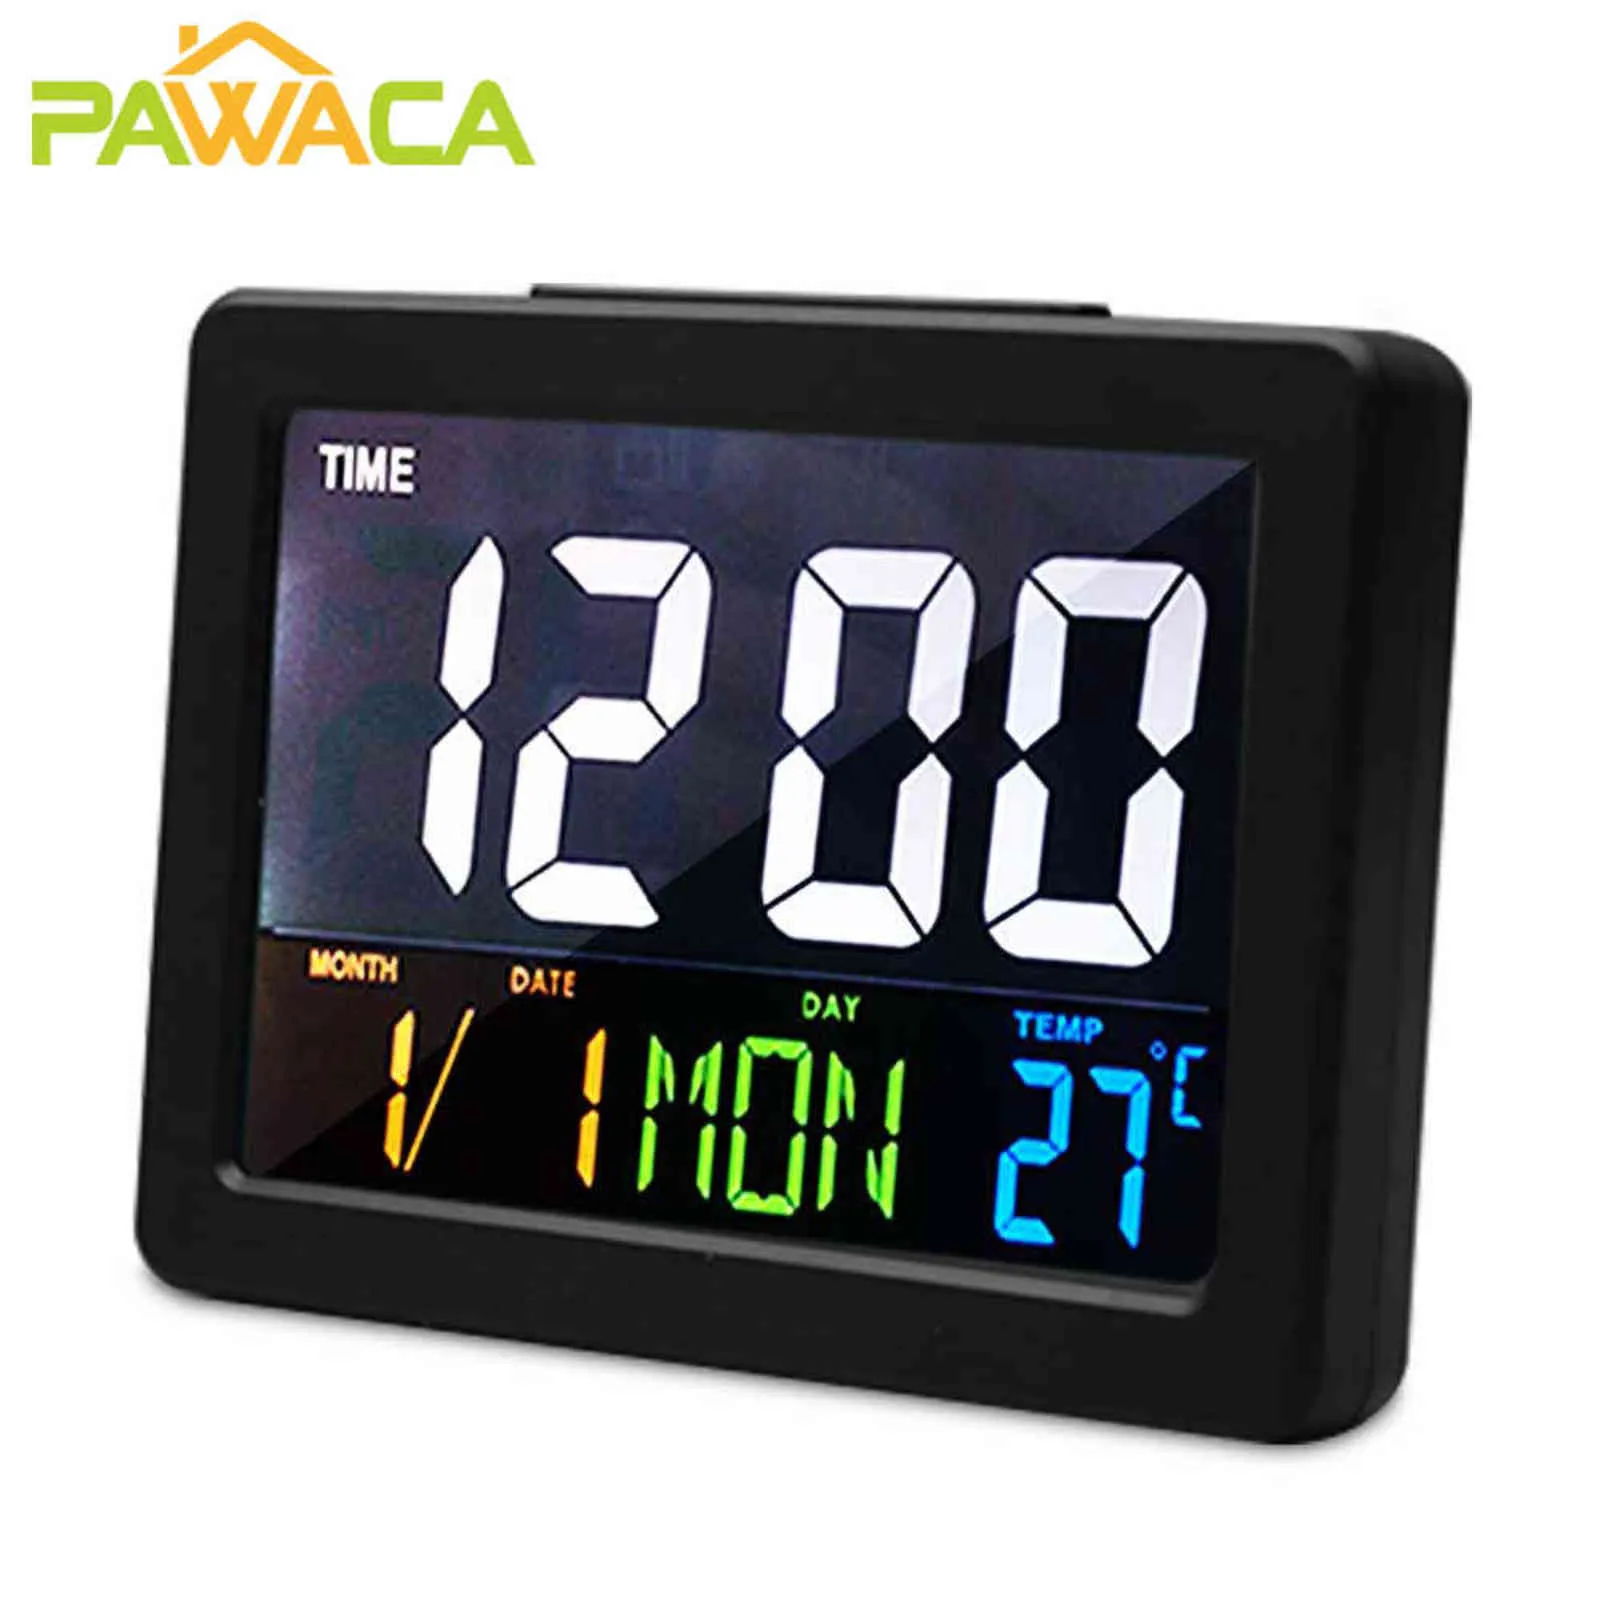 Gran pantalla a color Reloj despertador digital Mostrar fecha, semana, temperatura, hora, formatos de 24 horas Reloj de escritorio para oficina Dormitorio Cocina 211111